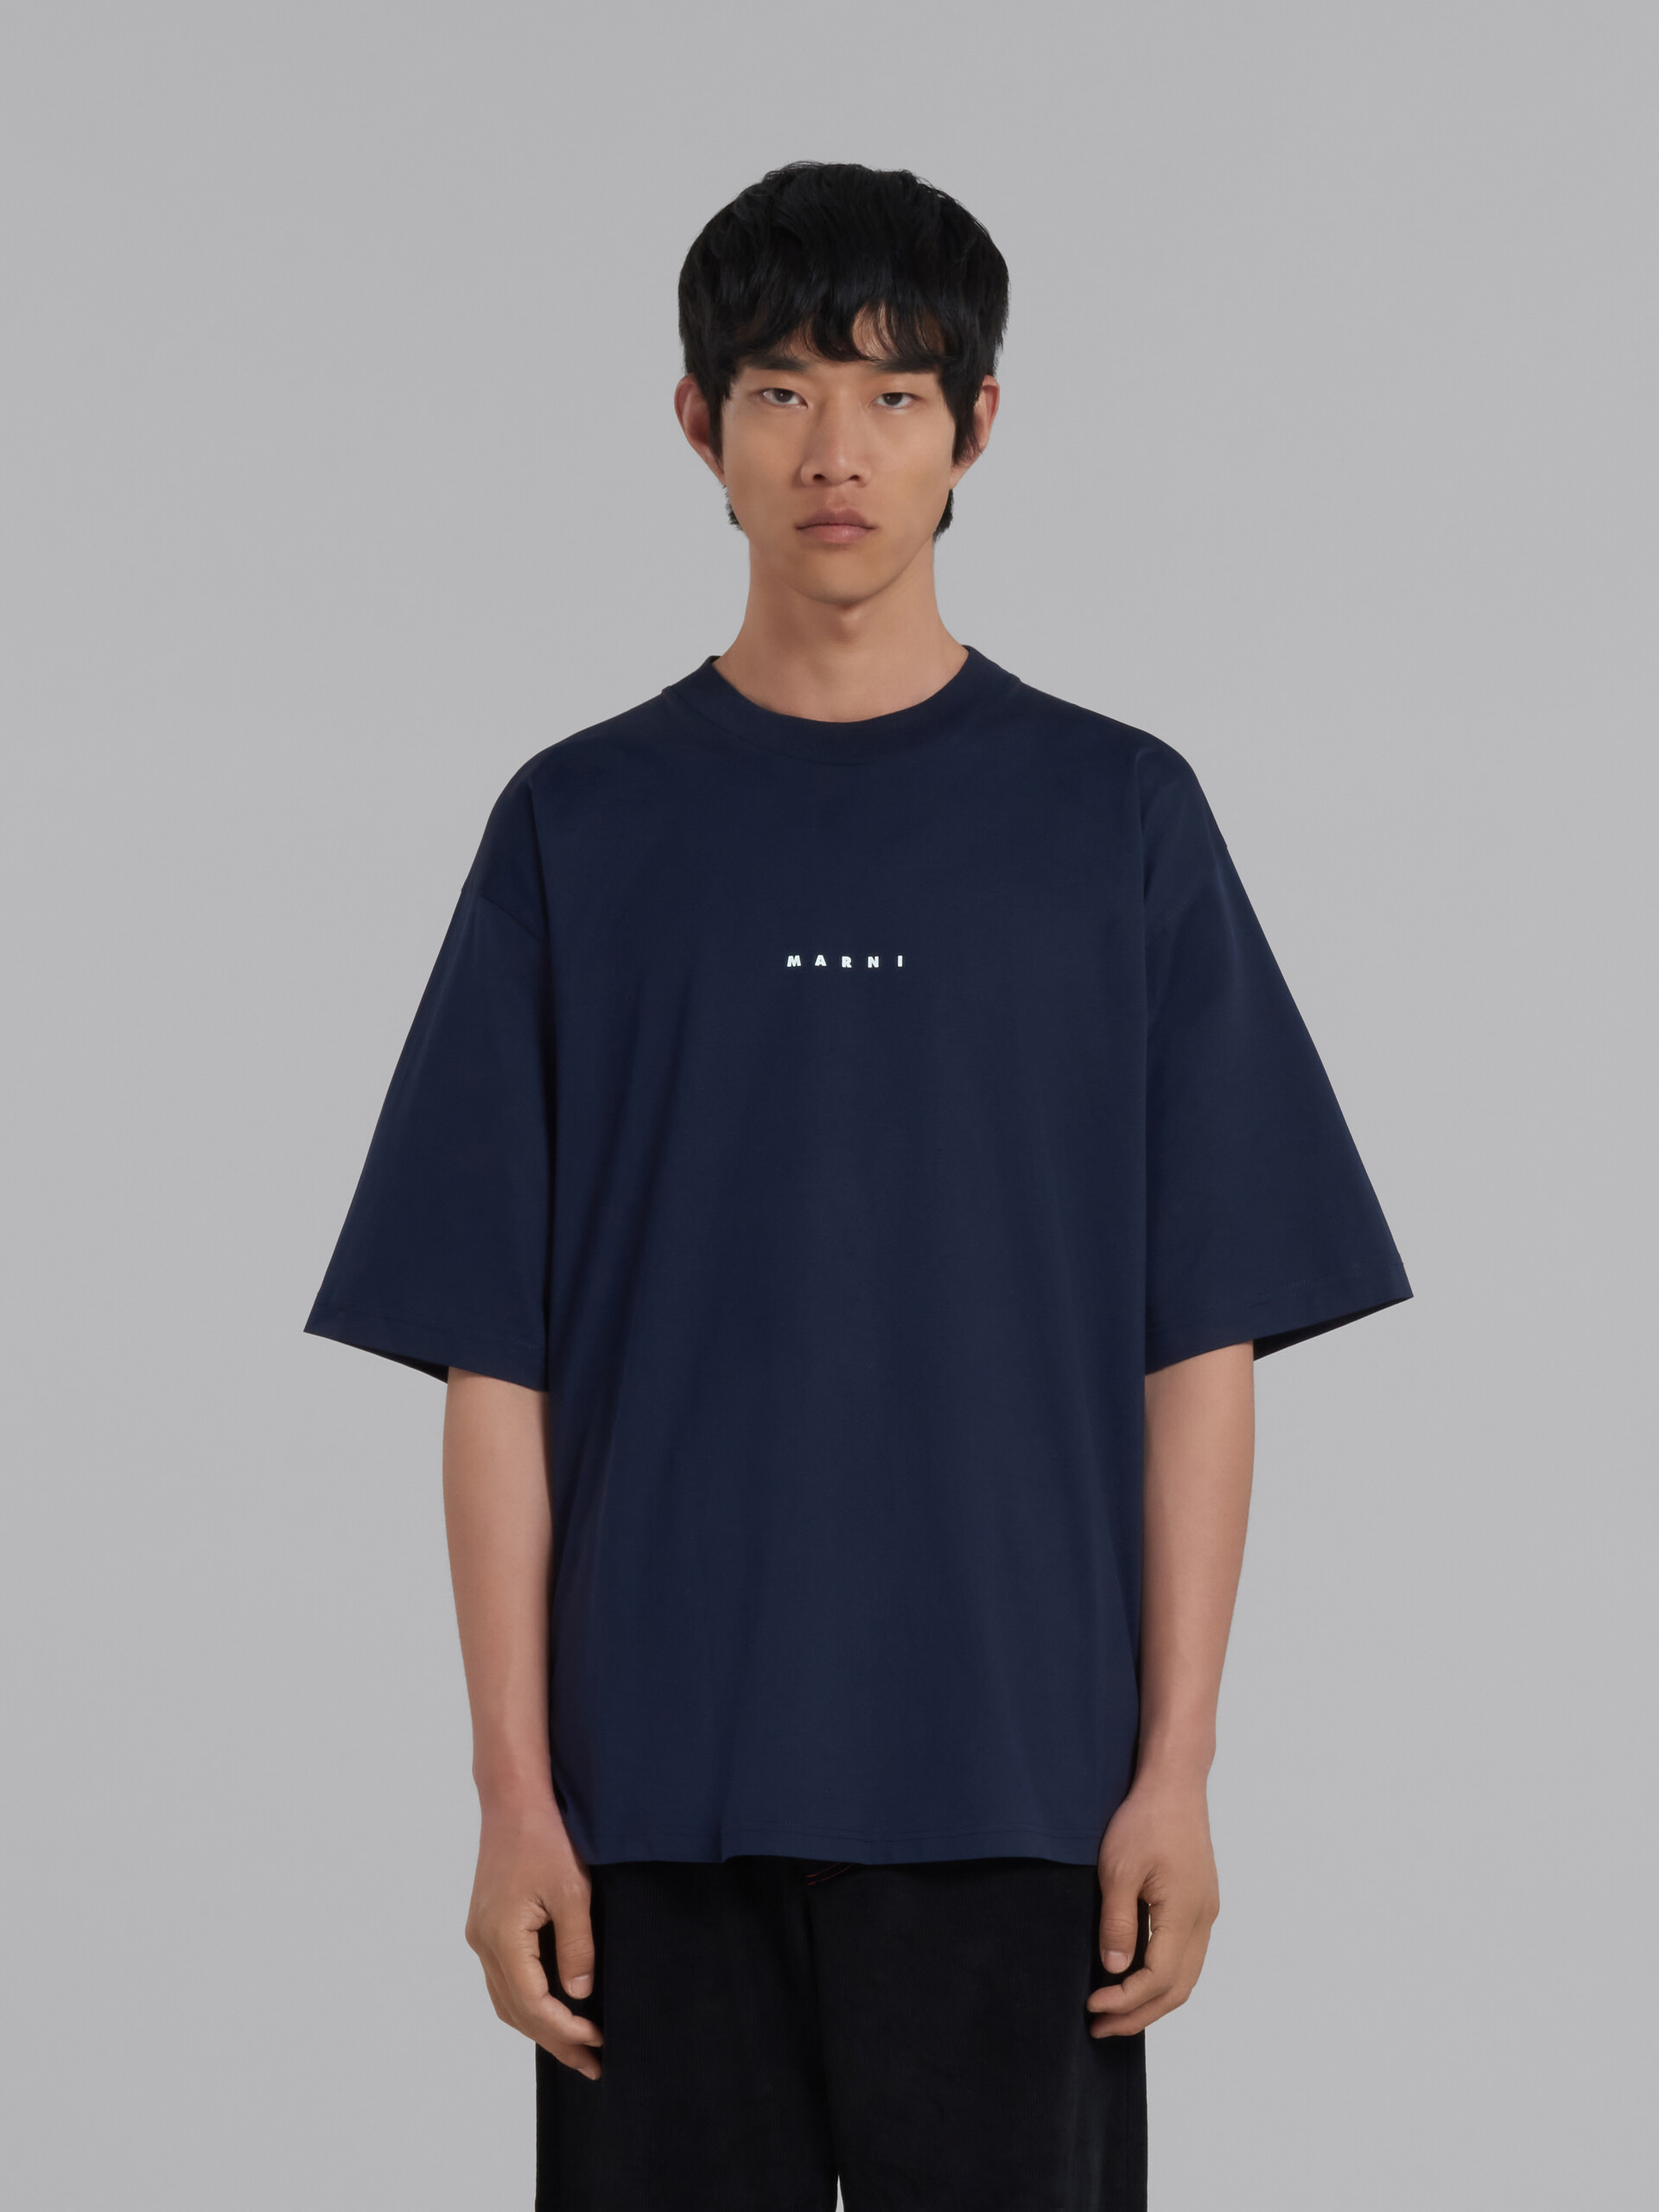 Blau-schwarzes Jersey-T-Shirt mit Logoprint - T-shirts - Image 2